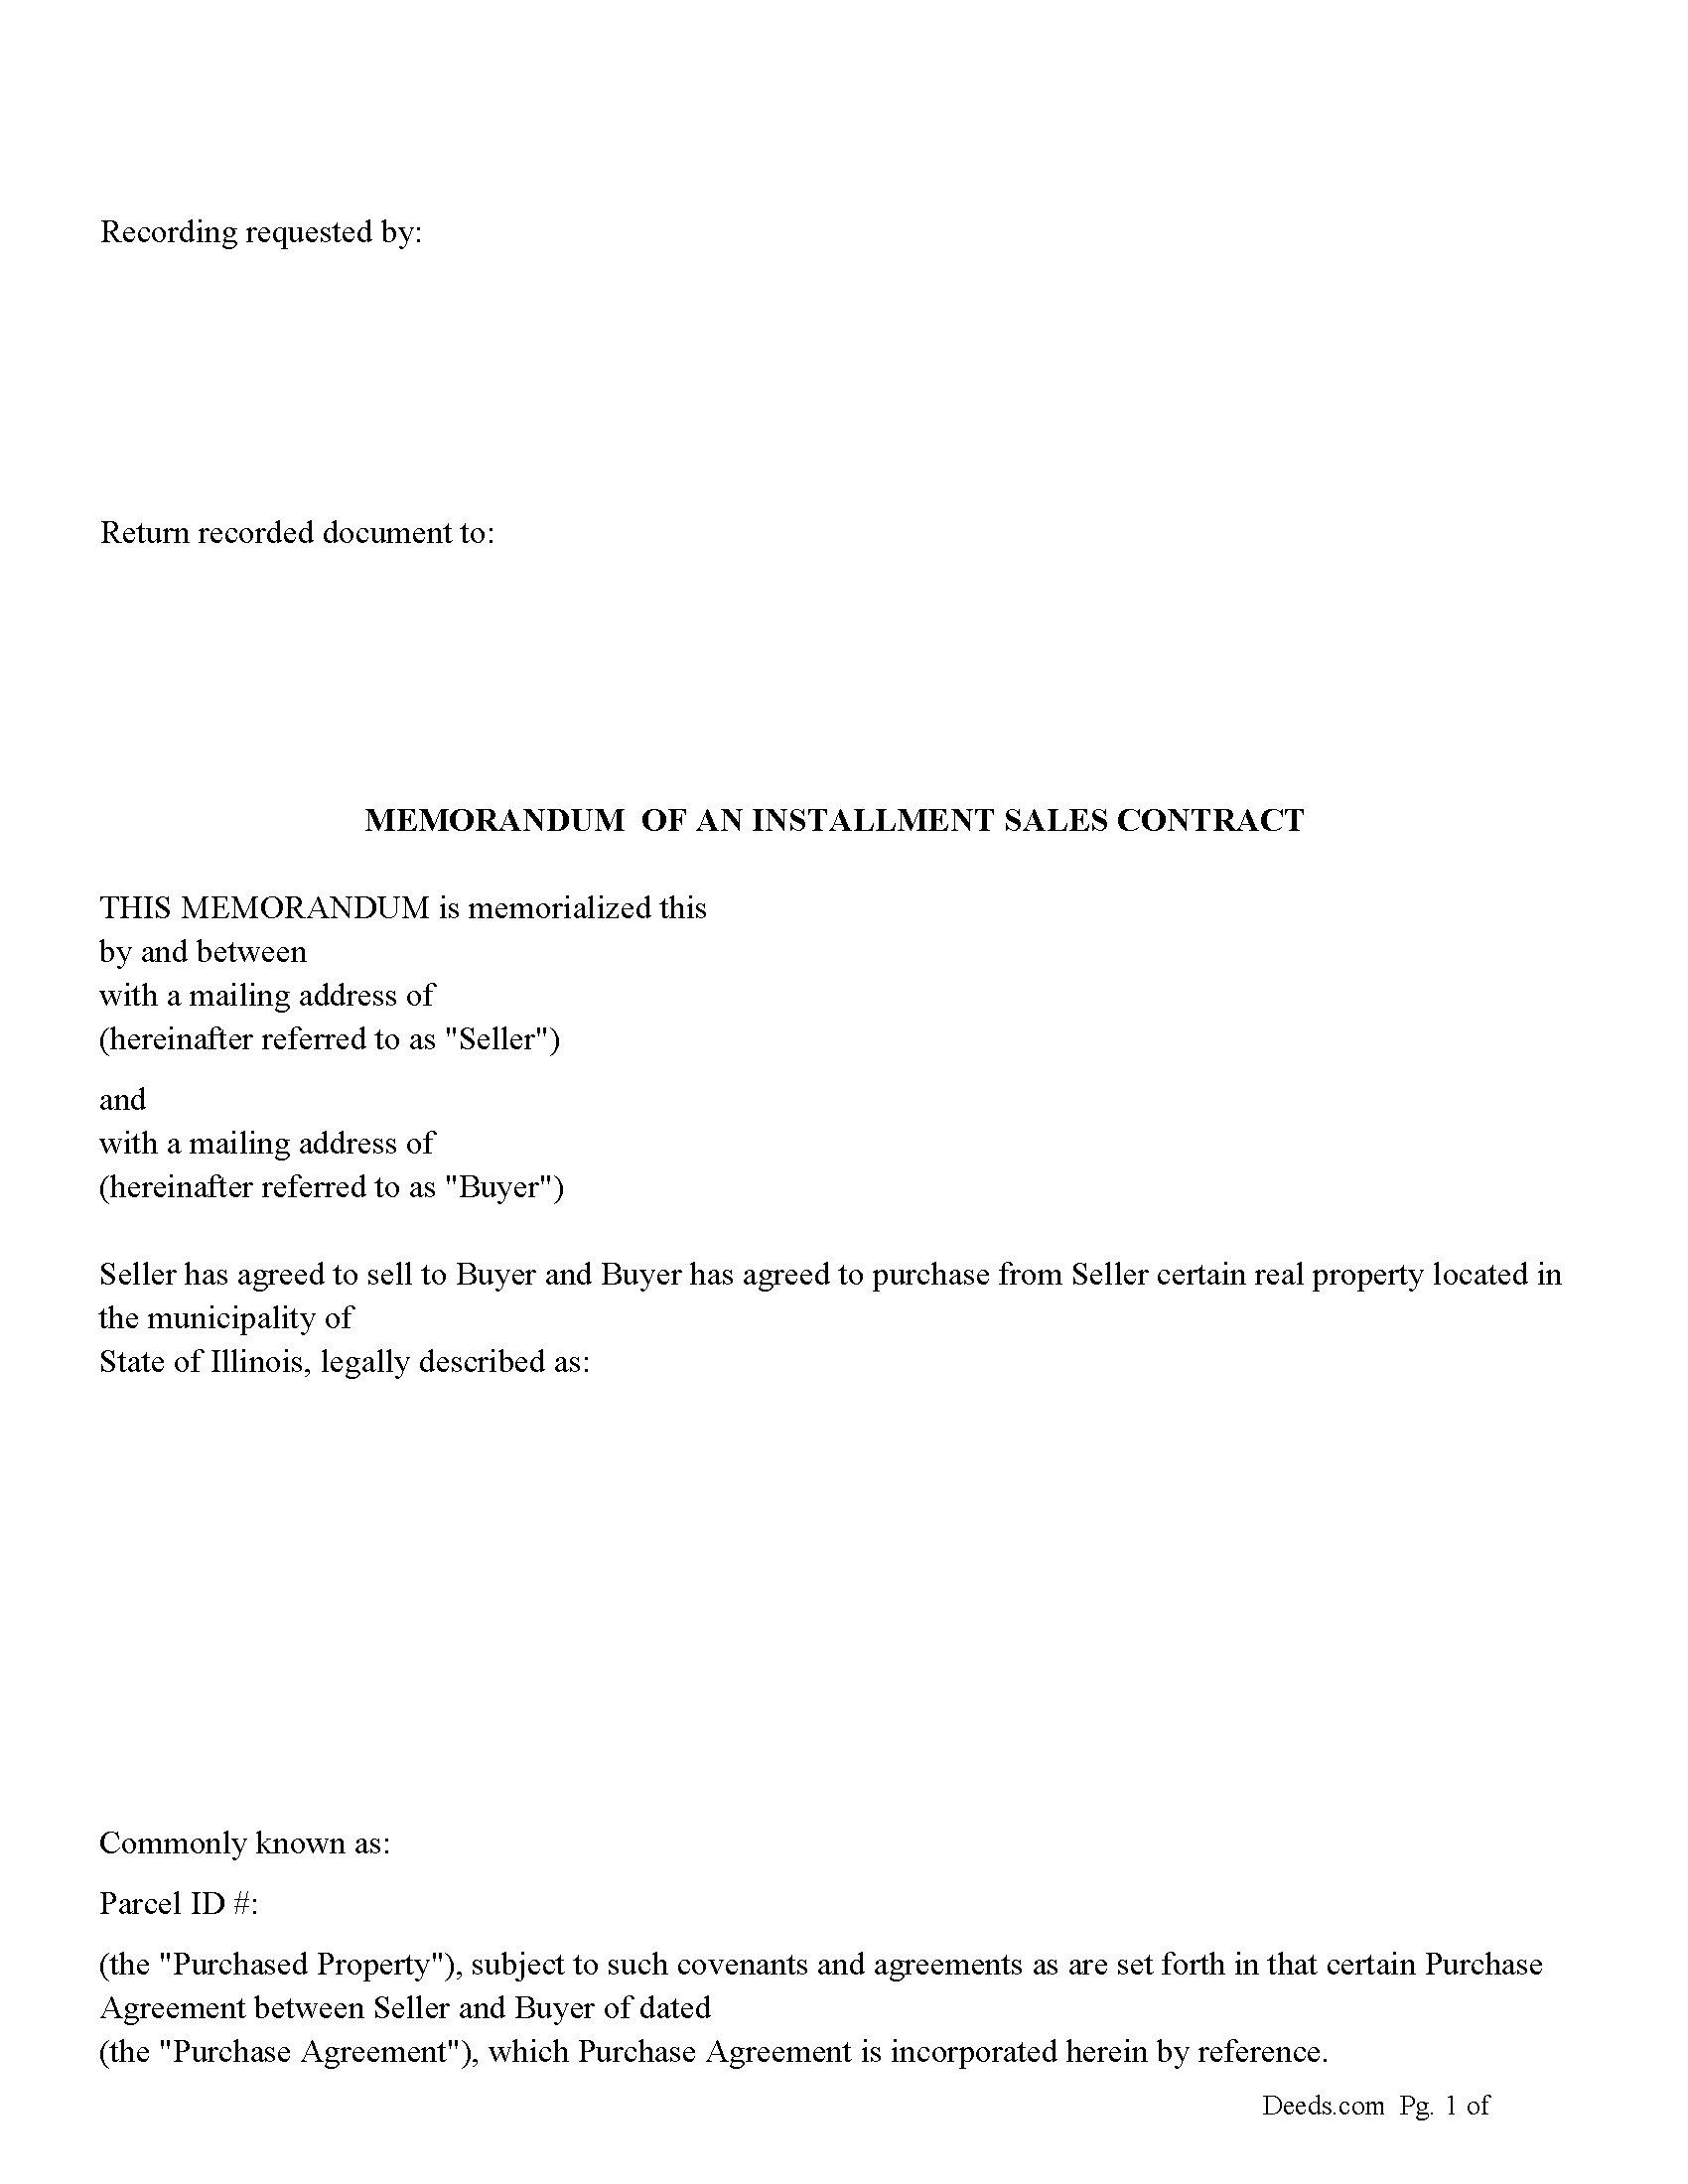 Fulton County Memorandum of an Installment Sales Contract Form